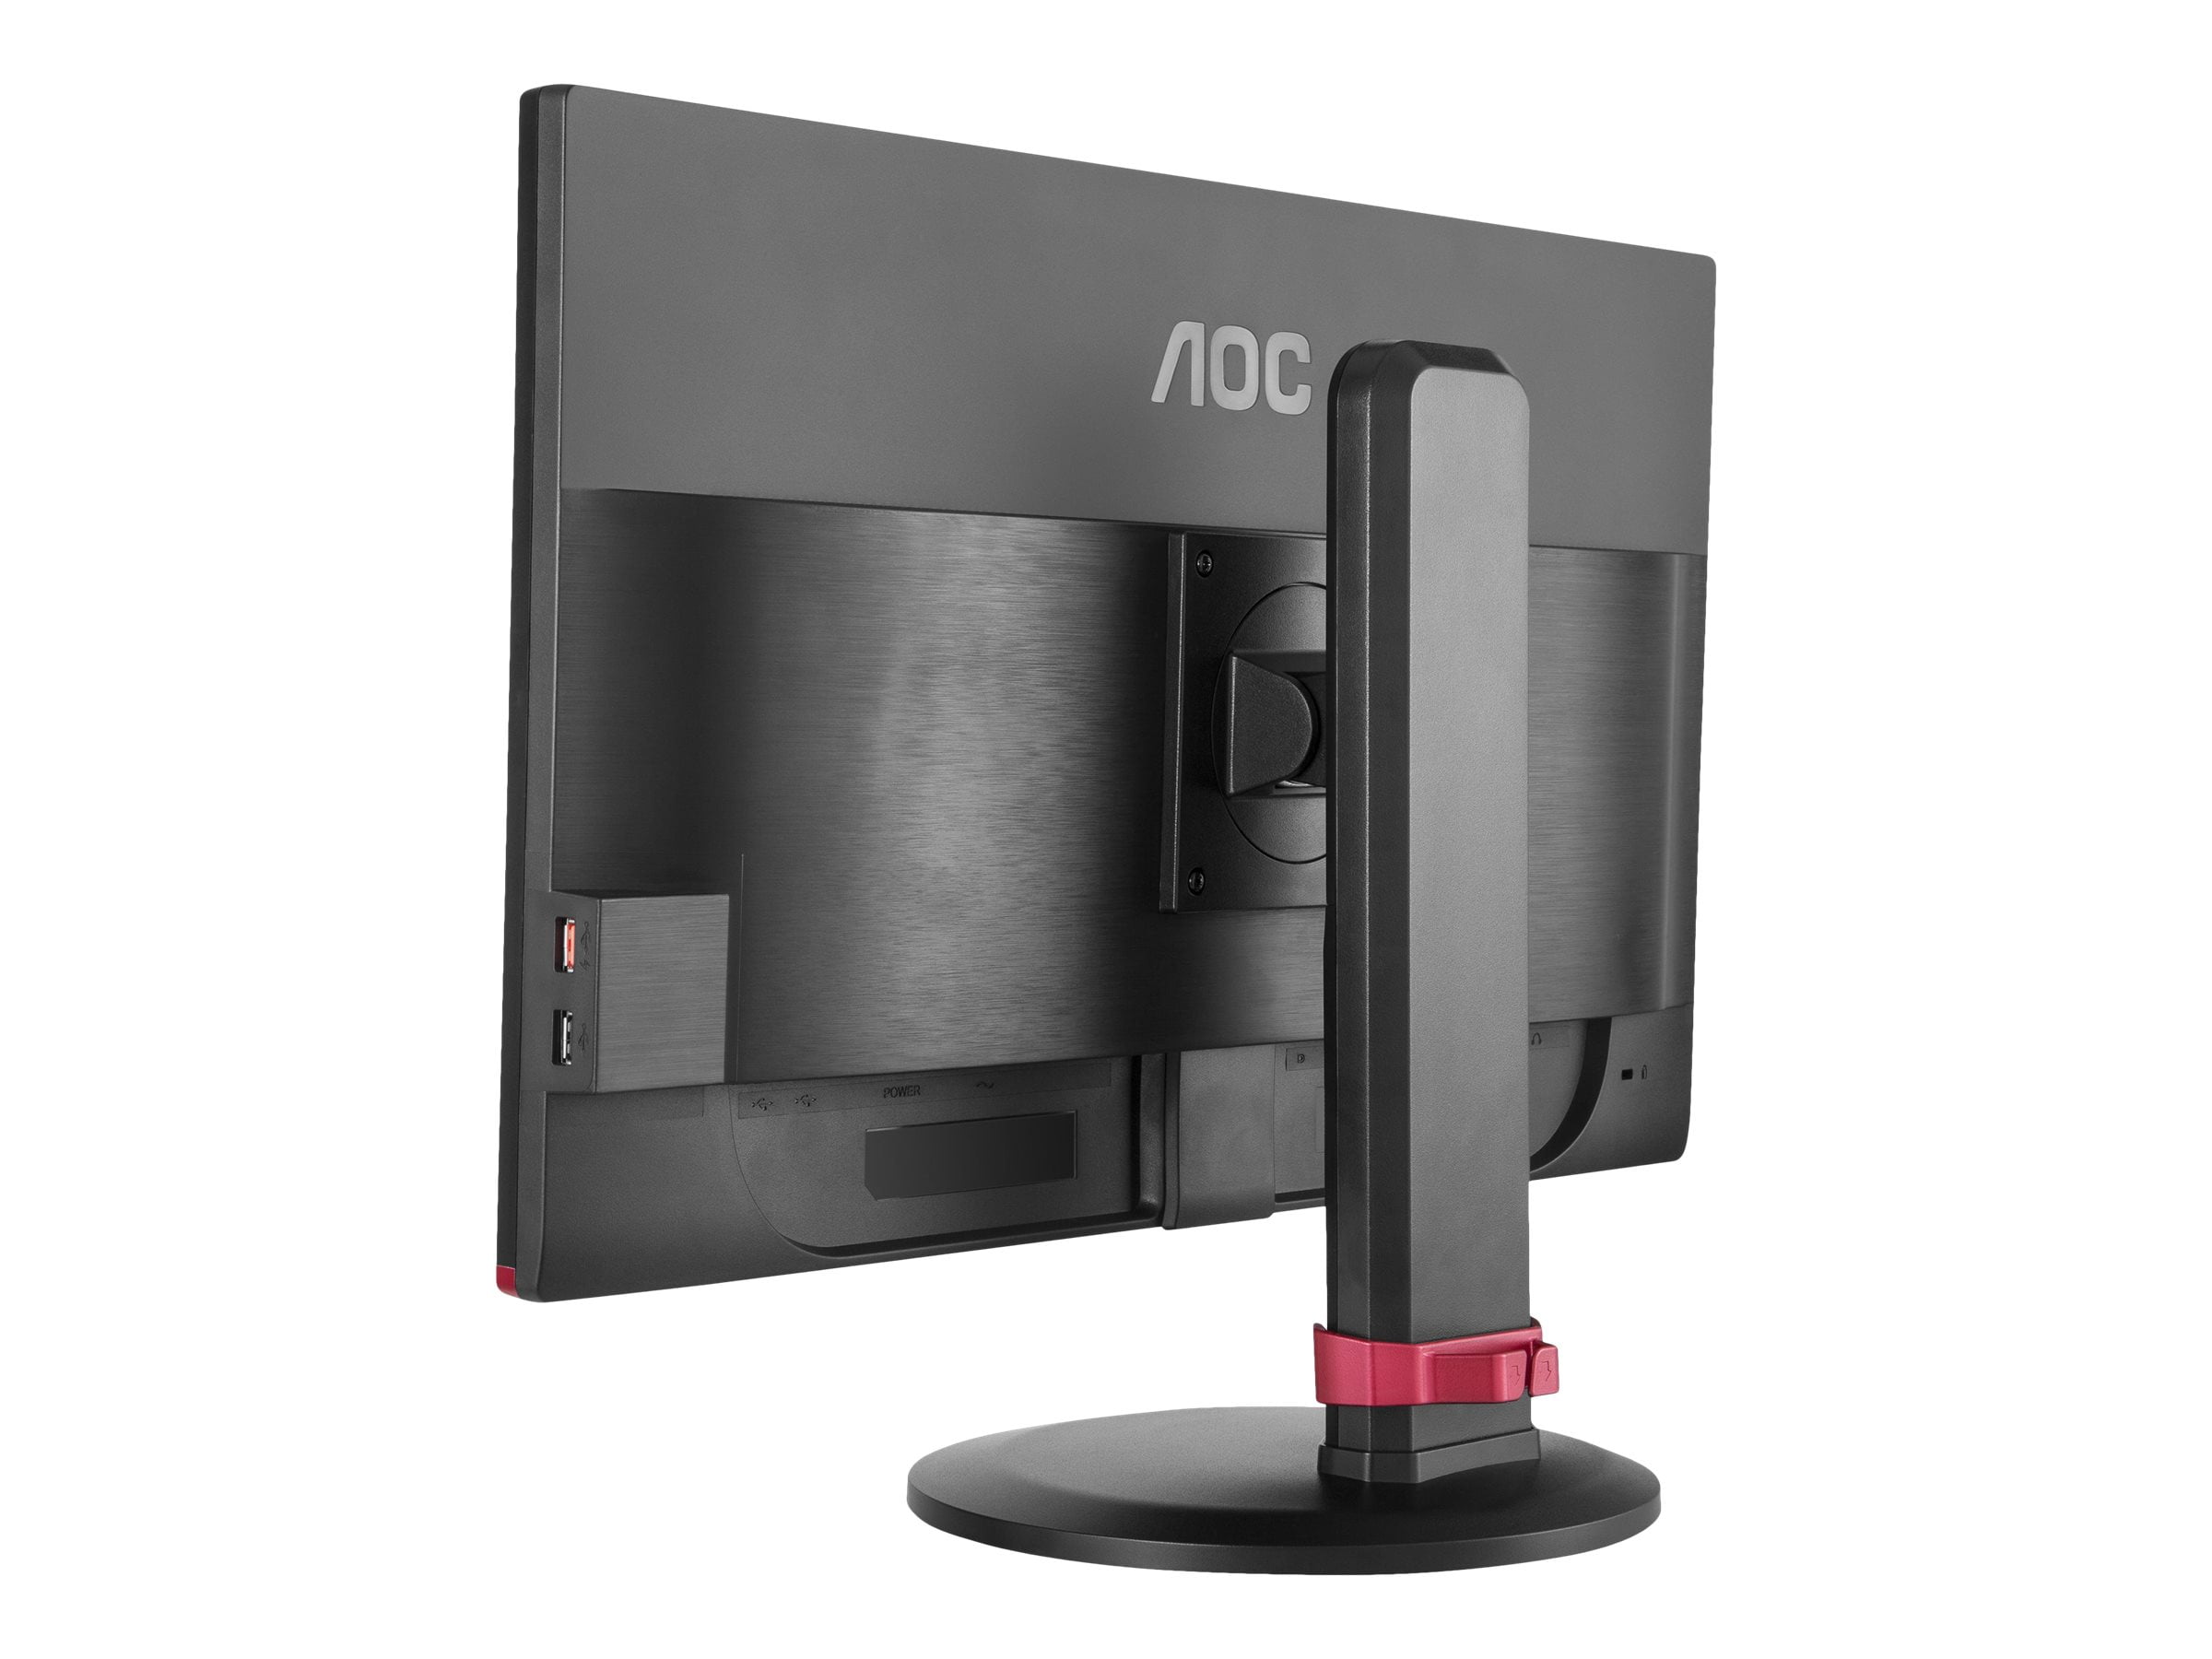 Aoc G2460pf 24 Inch 144hz Led Gaming Monitor